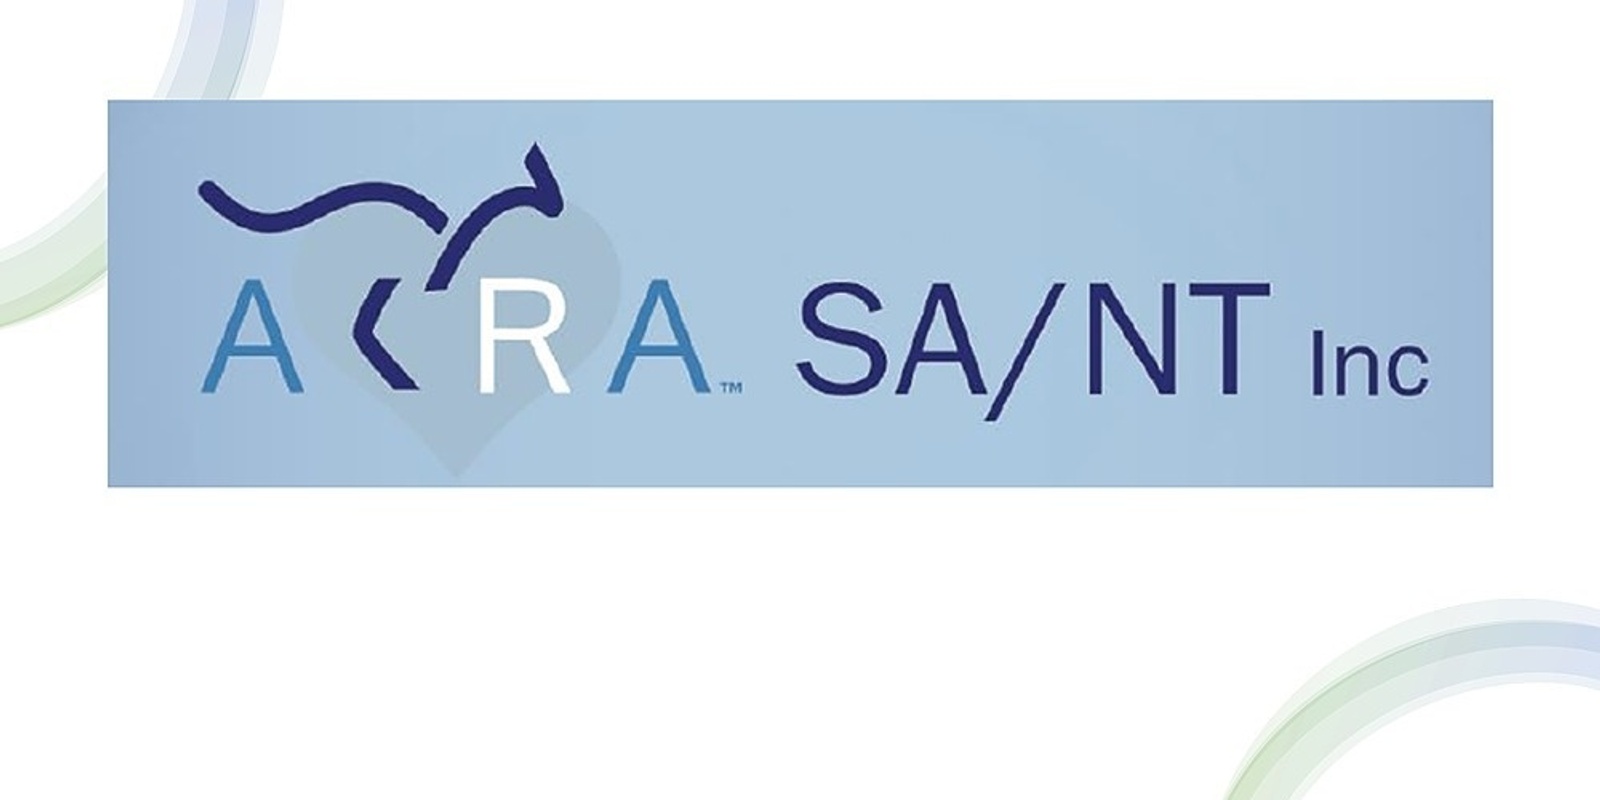 Banner image for ACRA SA/NT Showcase